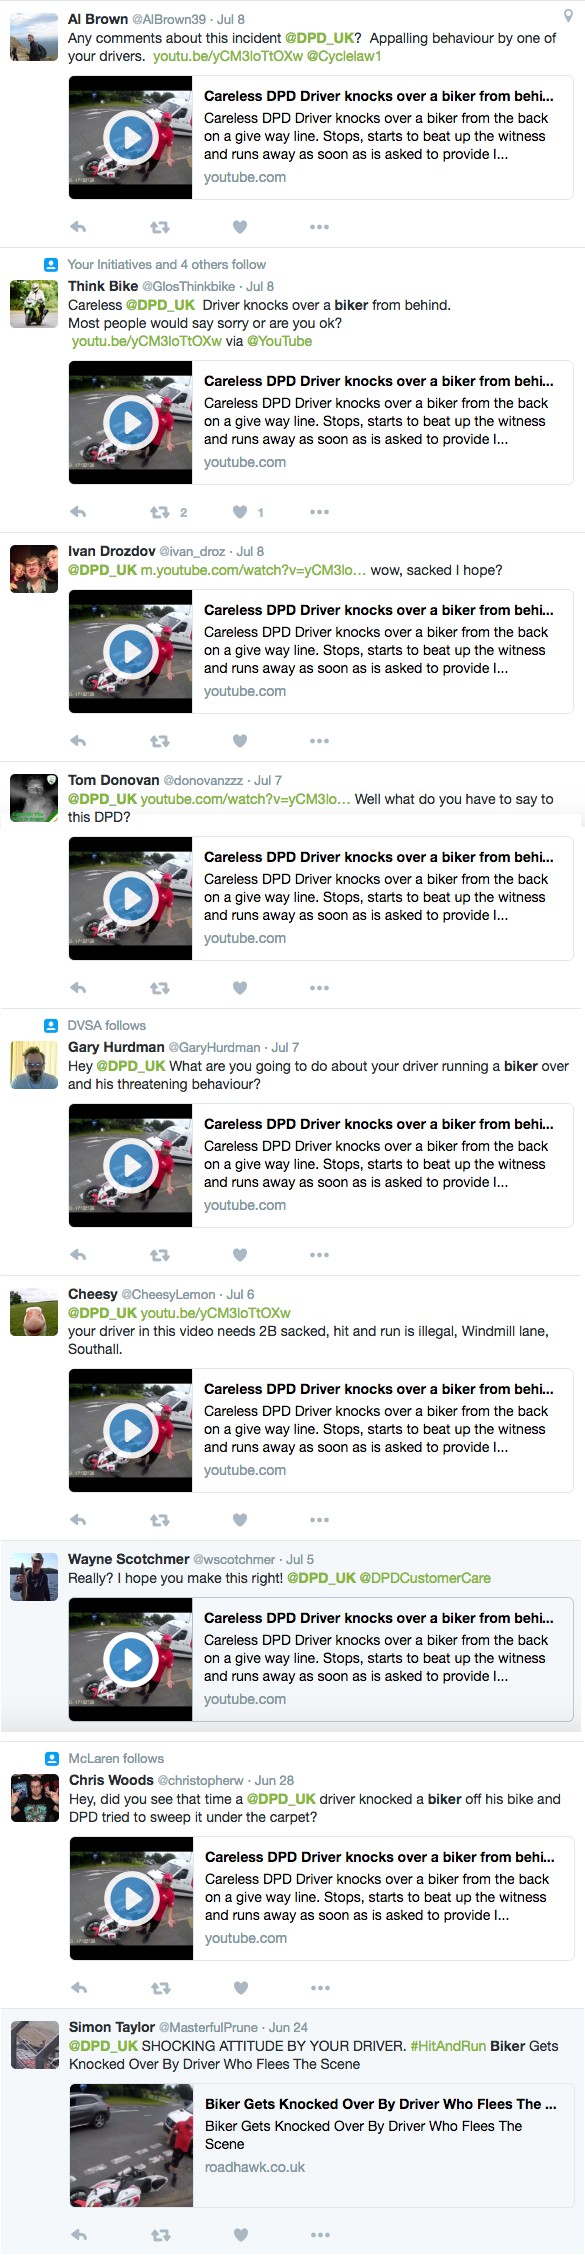 DPD Driver knocks down biker Twitter Comments